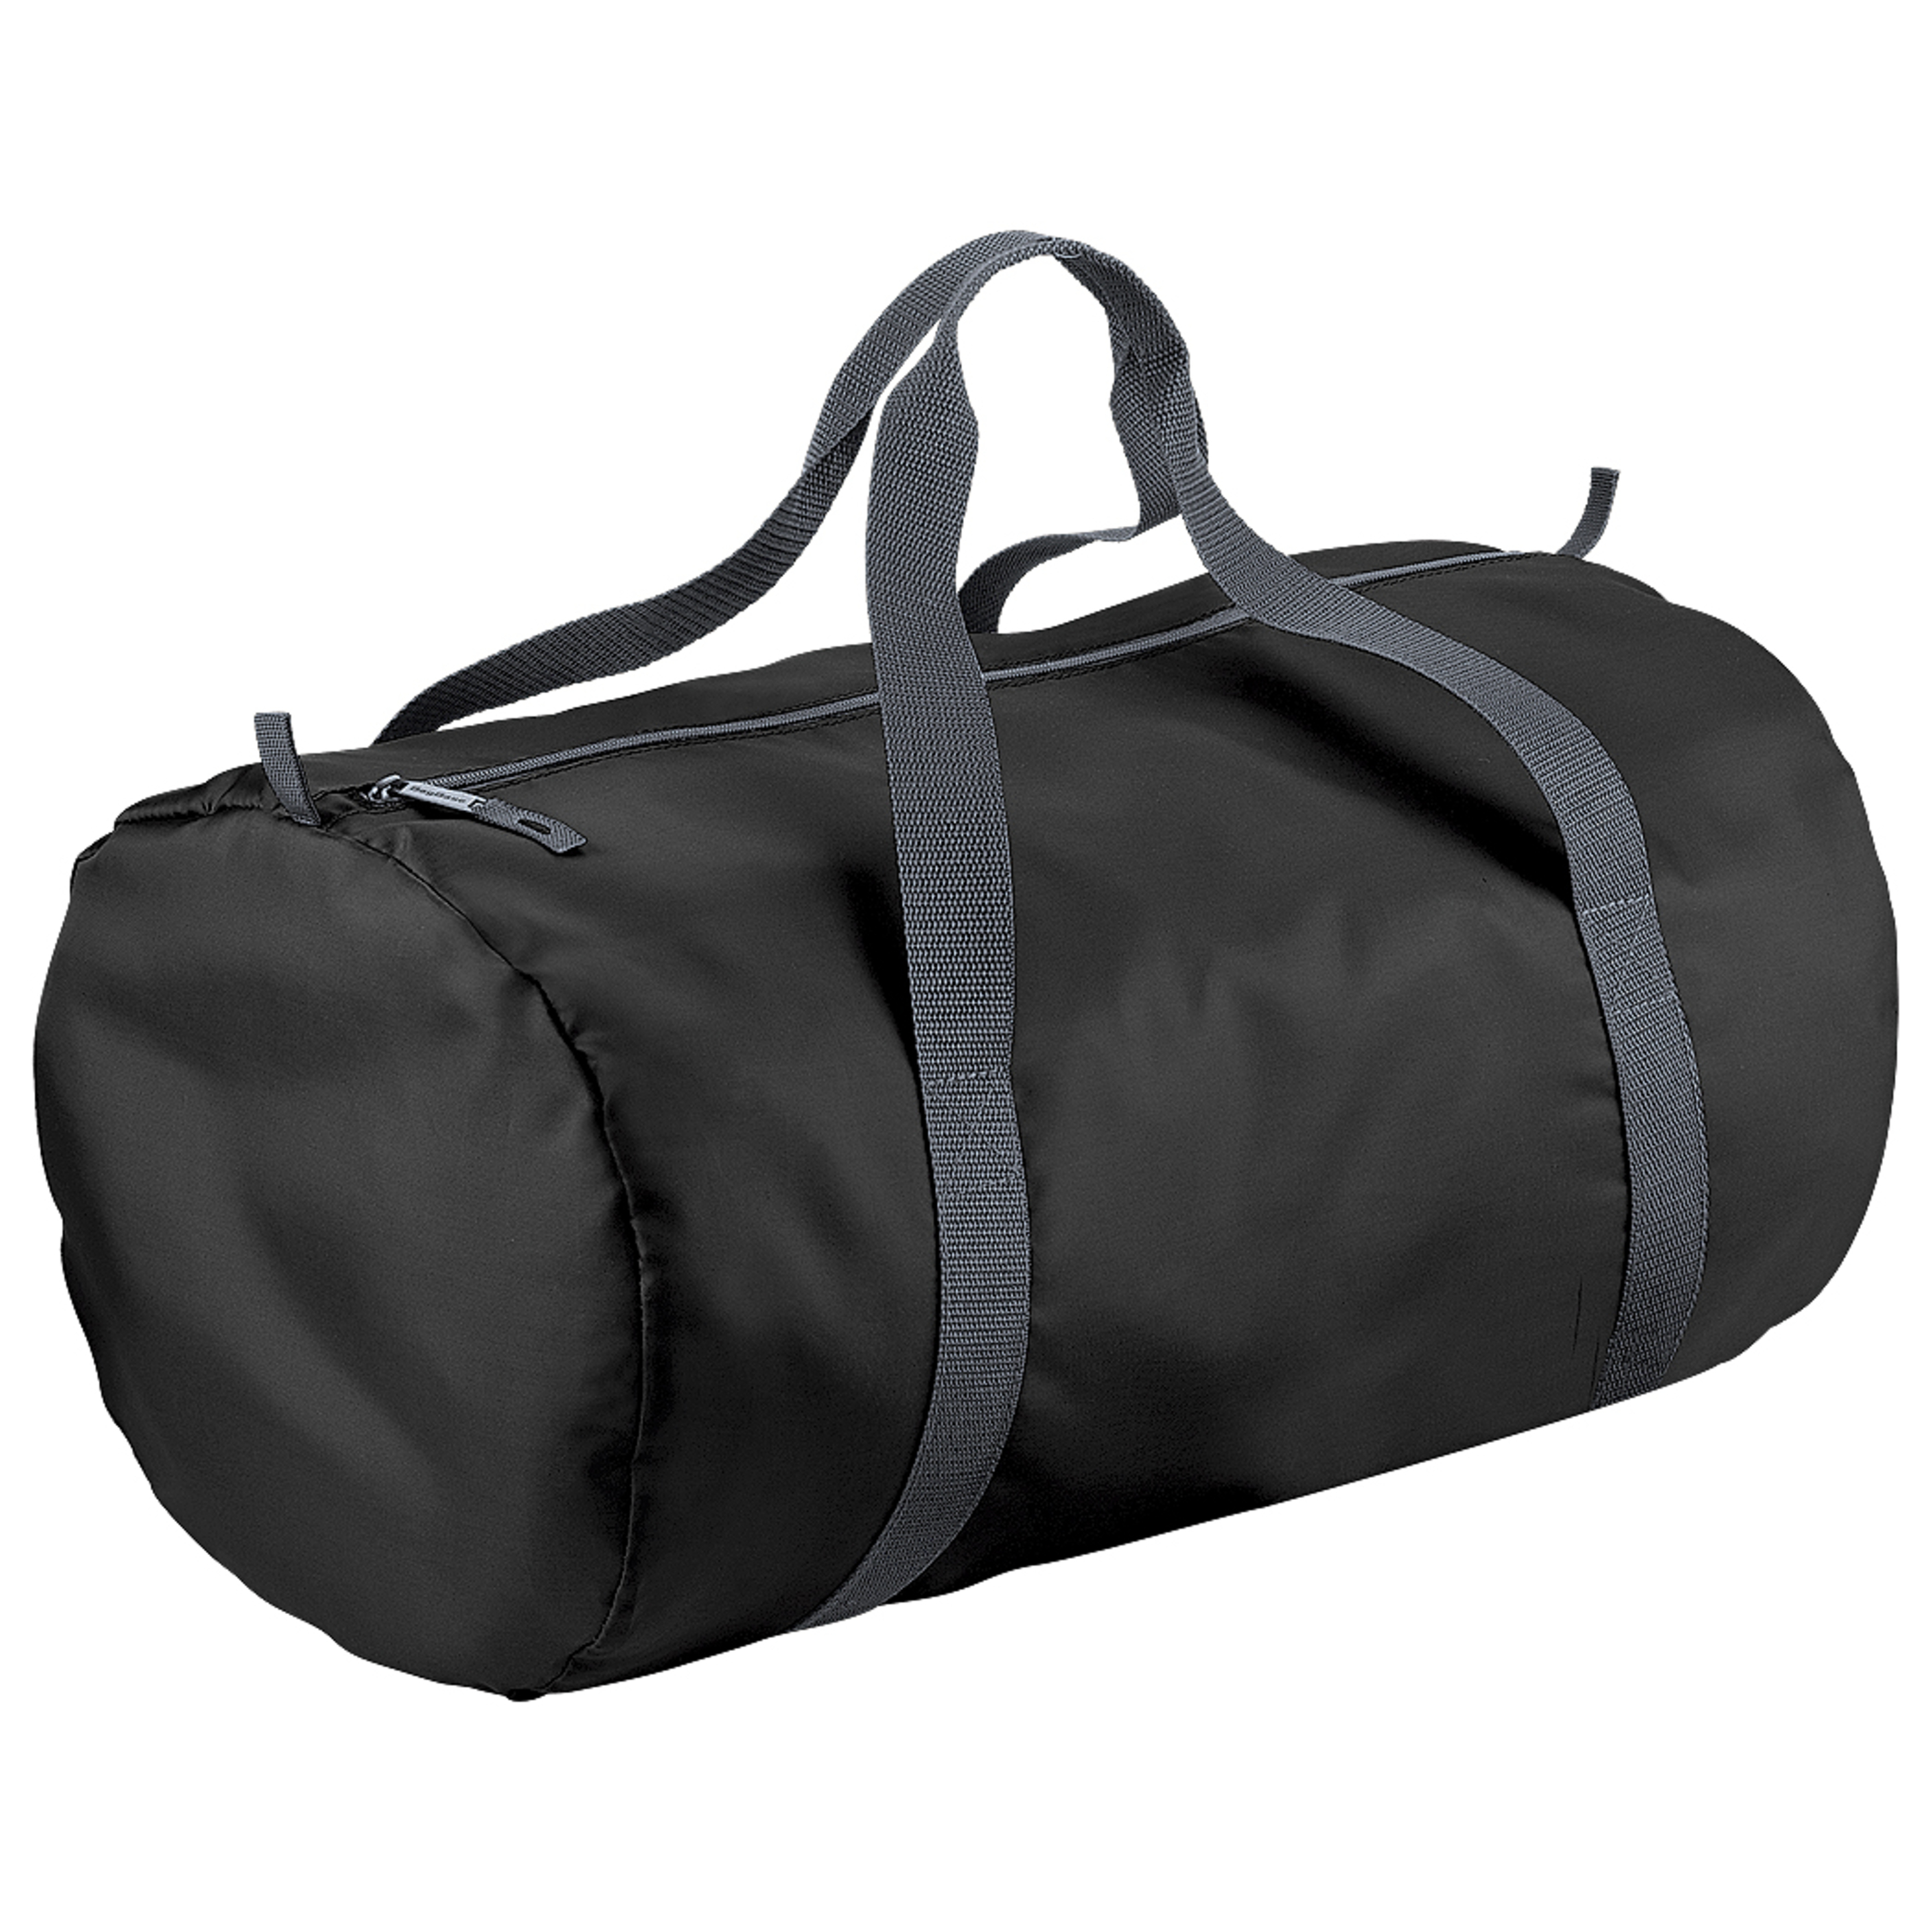 Pack 2 Mochilas Bagbase Impermeable Barrel Packaway - negro-gris - 